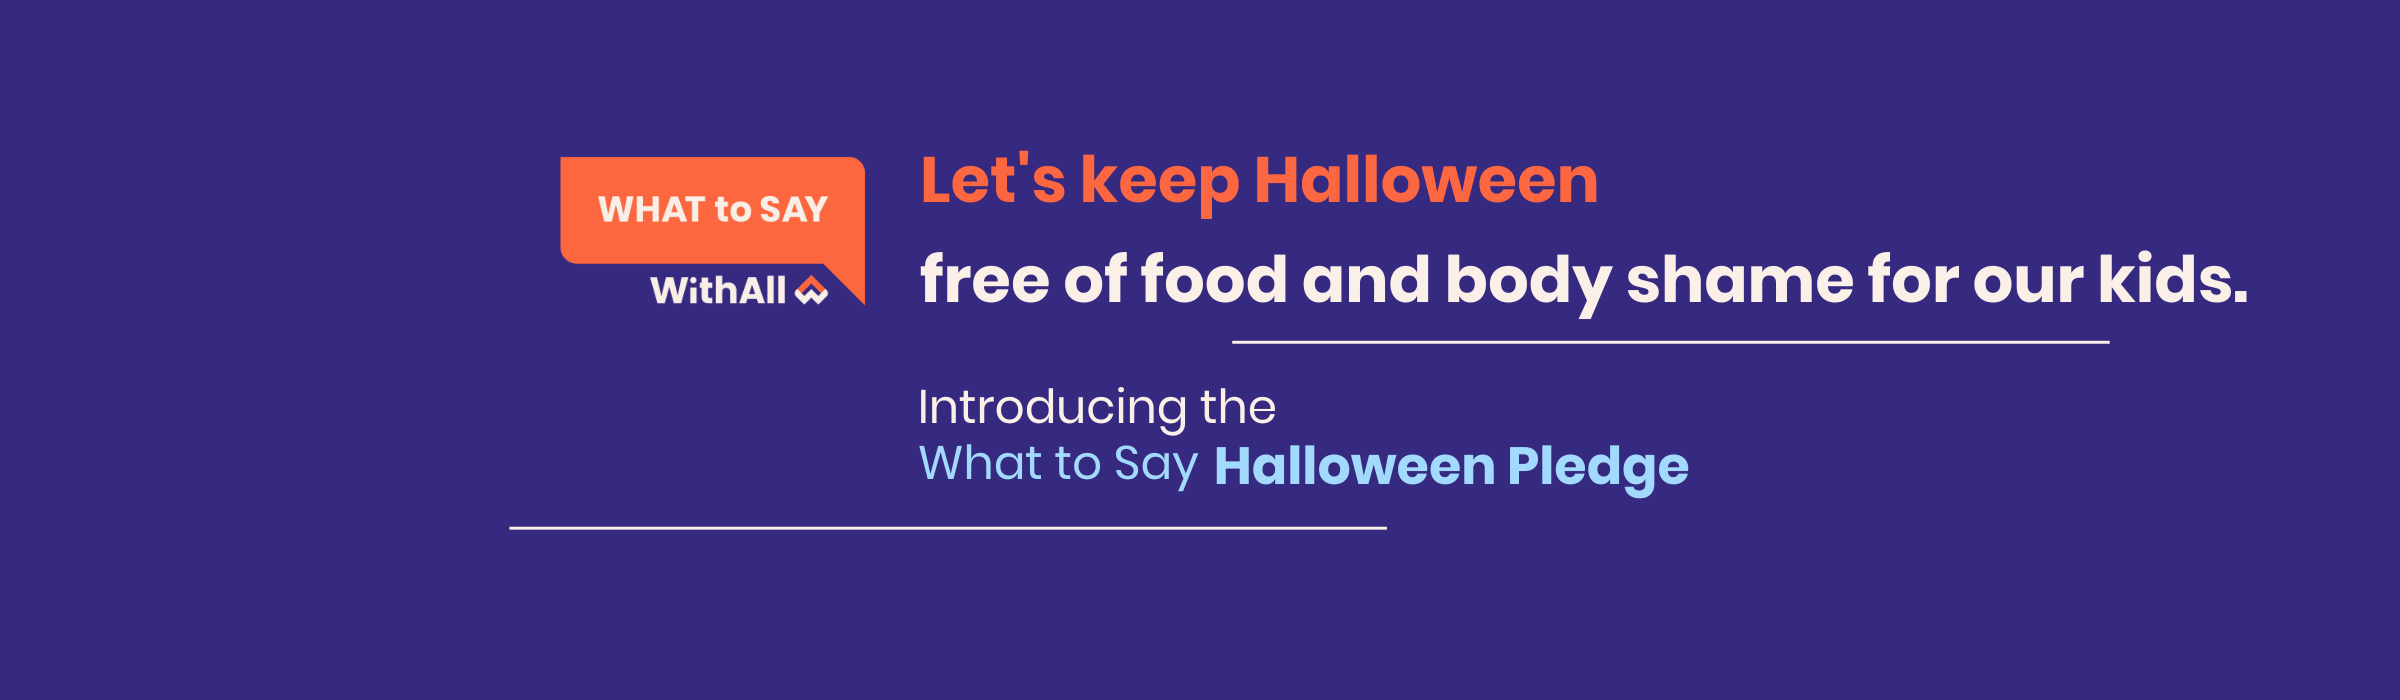 Halloween Pledge for Website 2